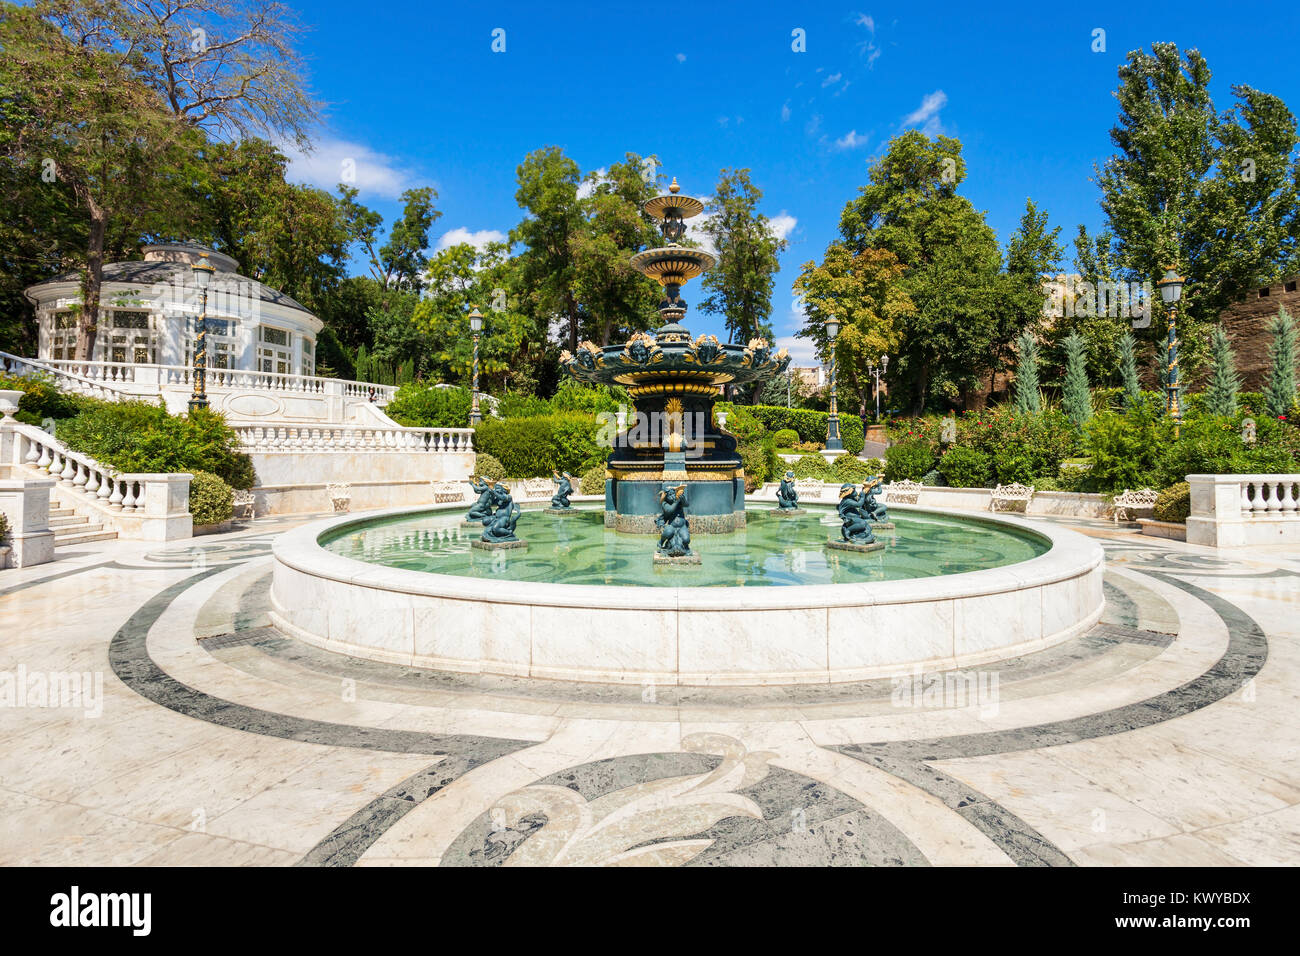 Philharmonic Fountain Park near the Old City in Baku, Azerbaijan. Also known as the Governor's Garden or Vahid Park, slopes down towards the Caspian f Stock Photo